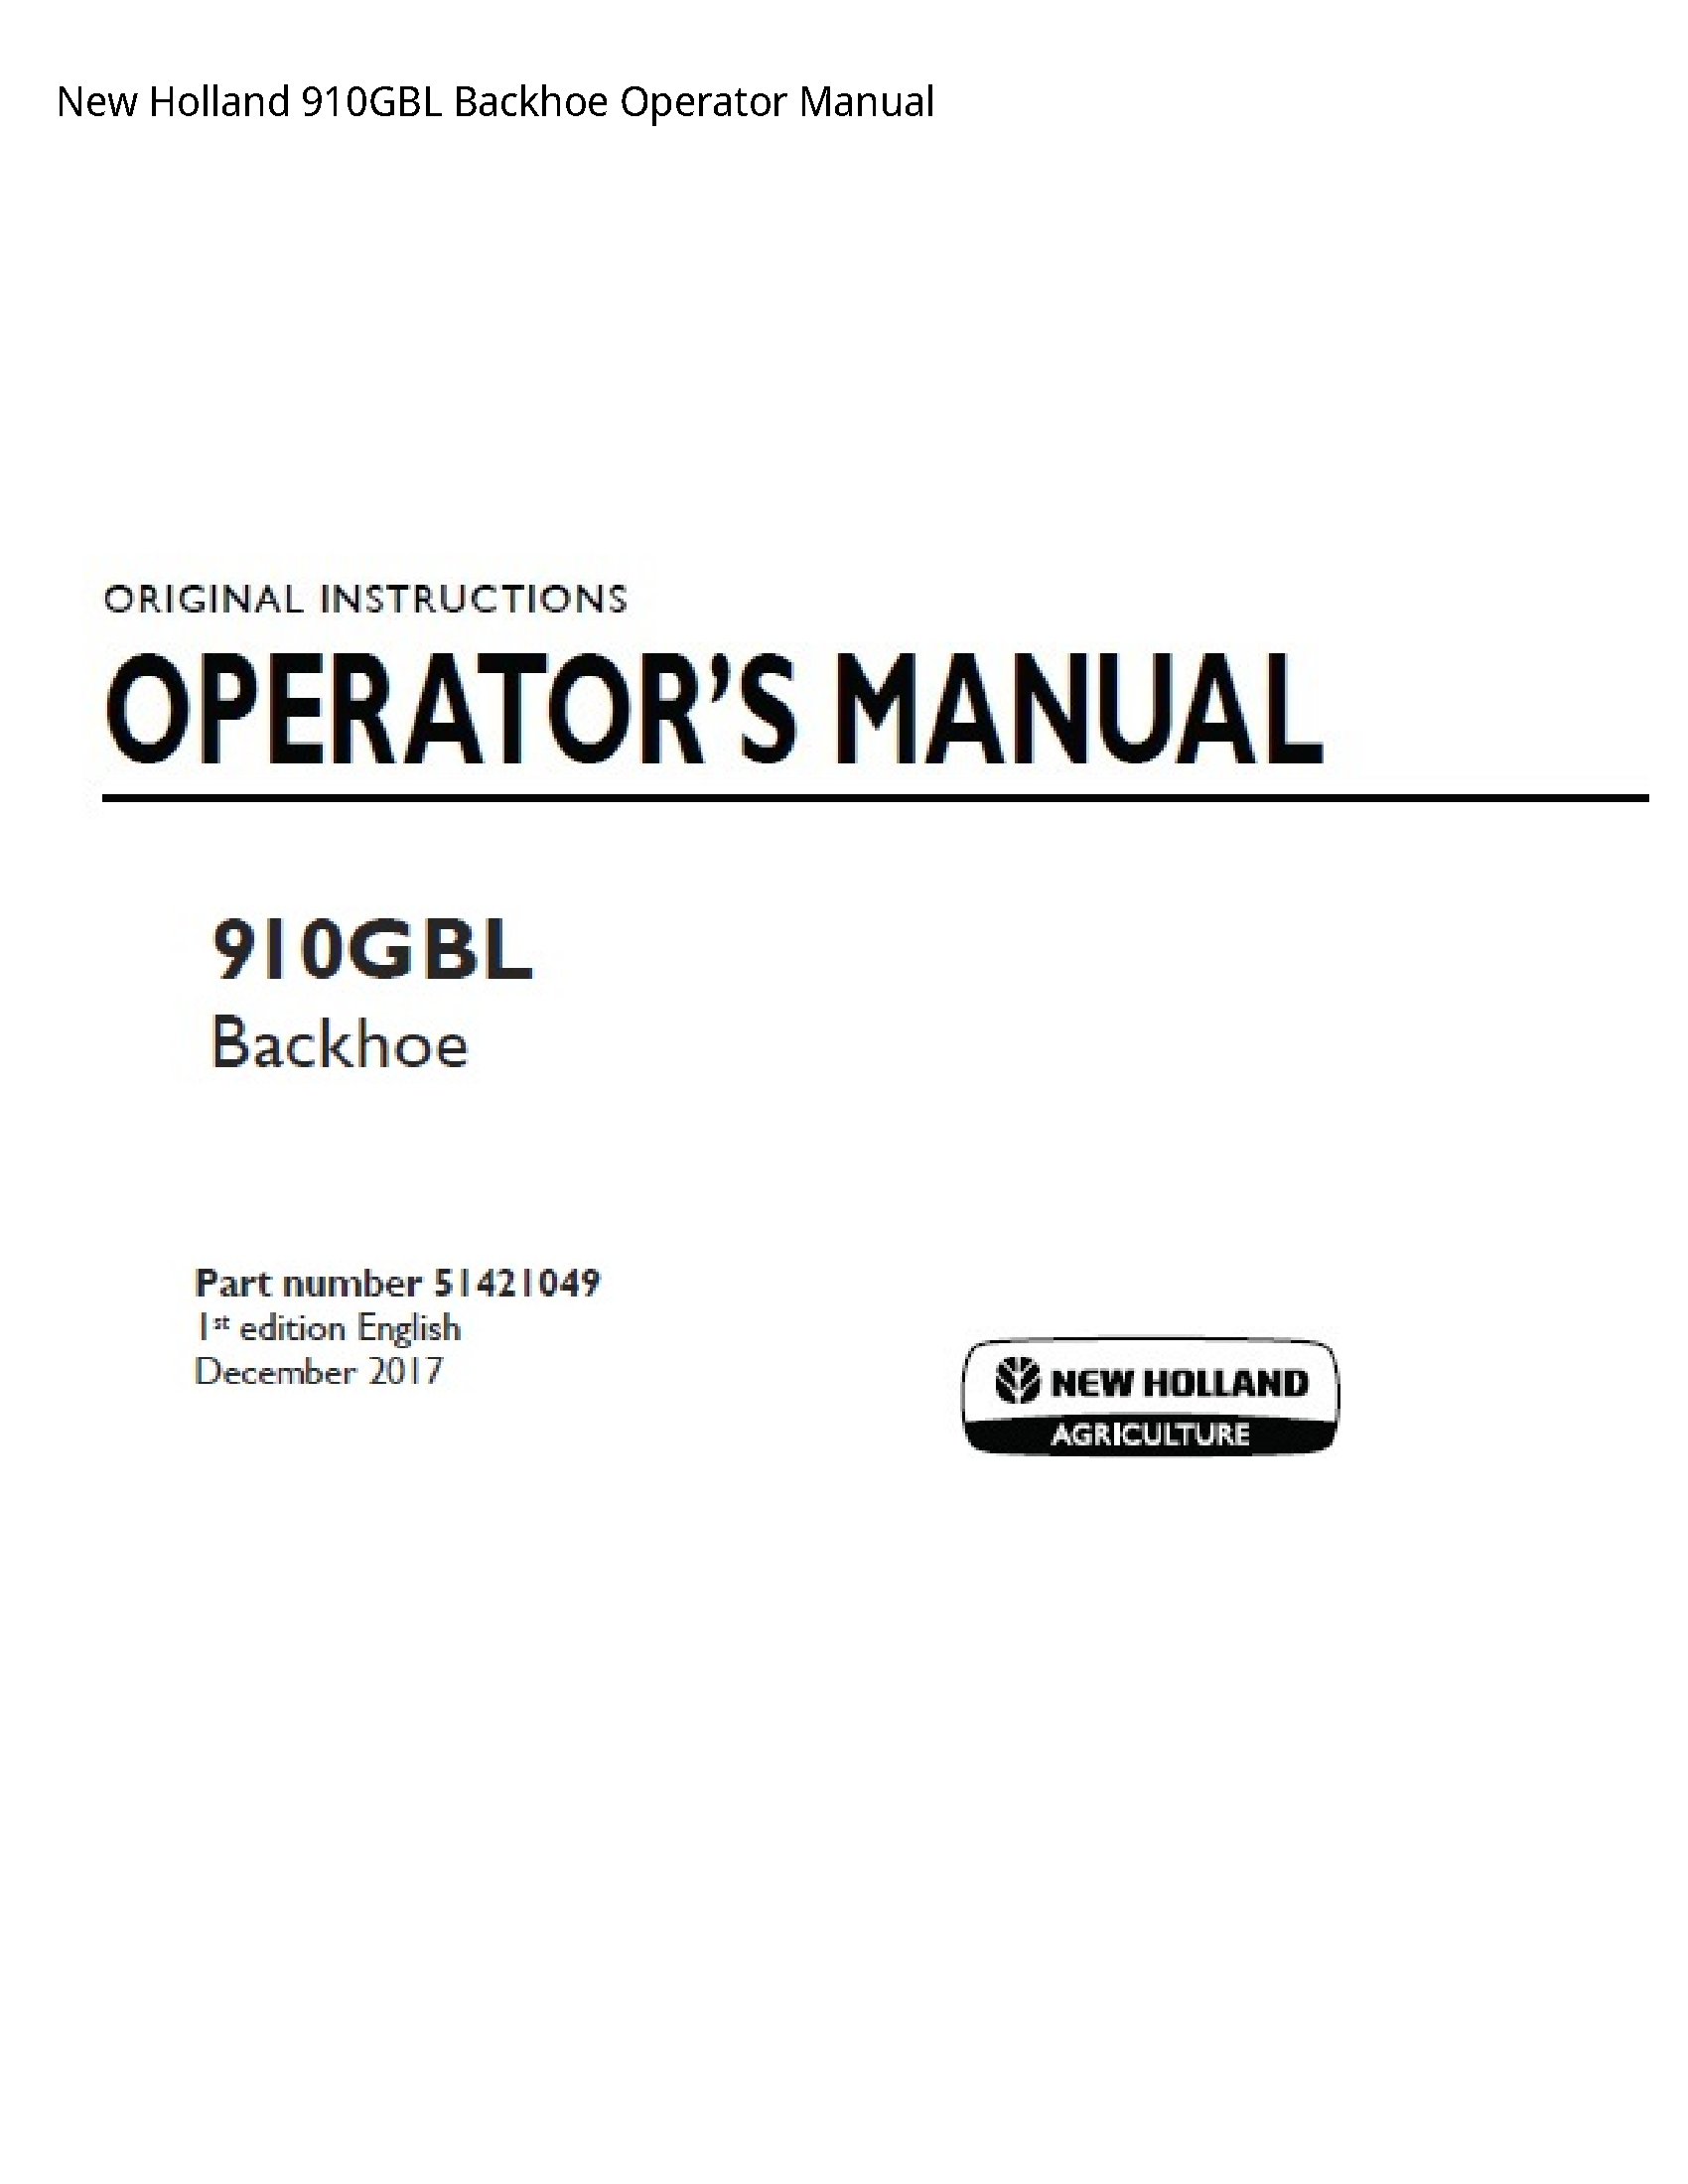 New Holland 910GBL Backhoe Operator manual